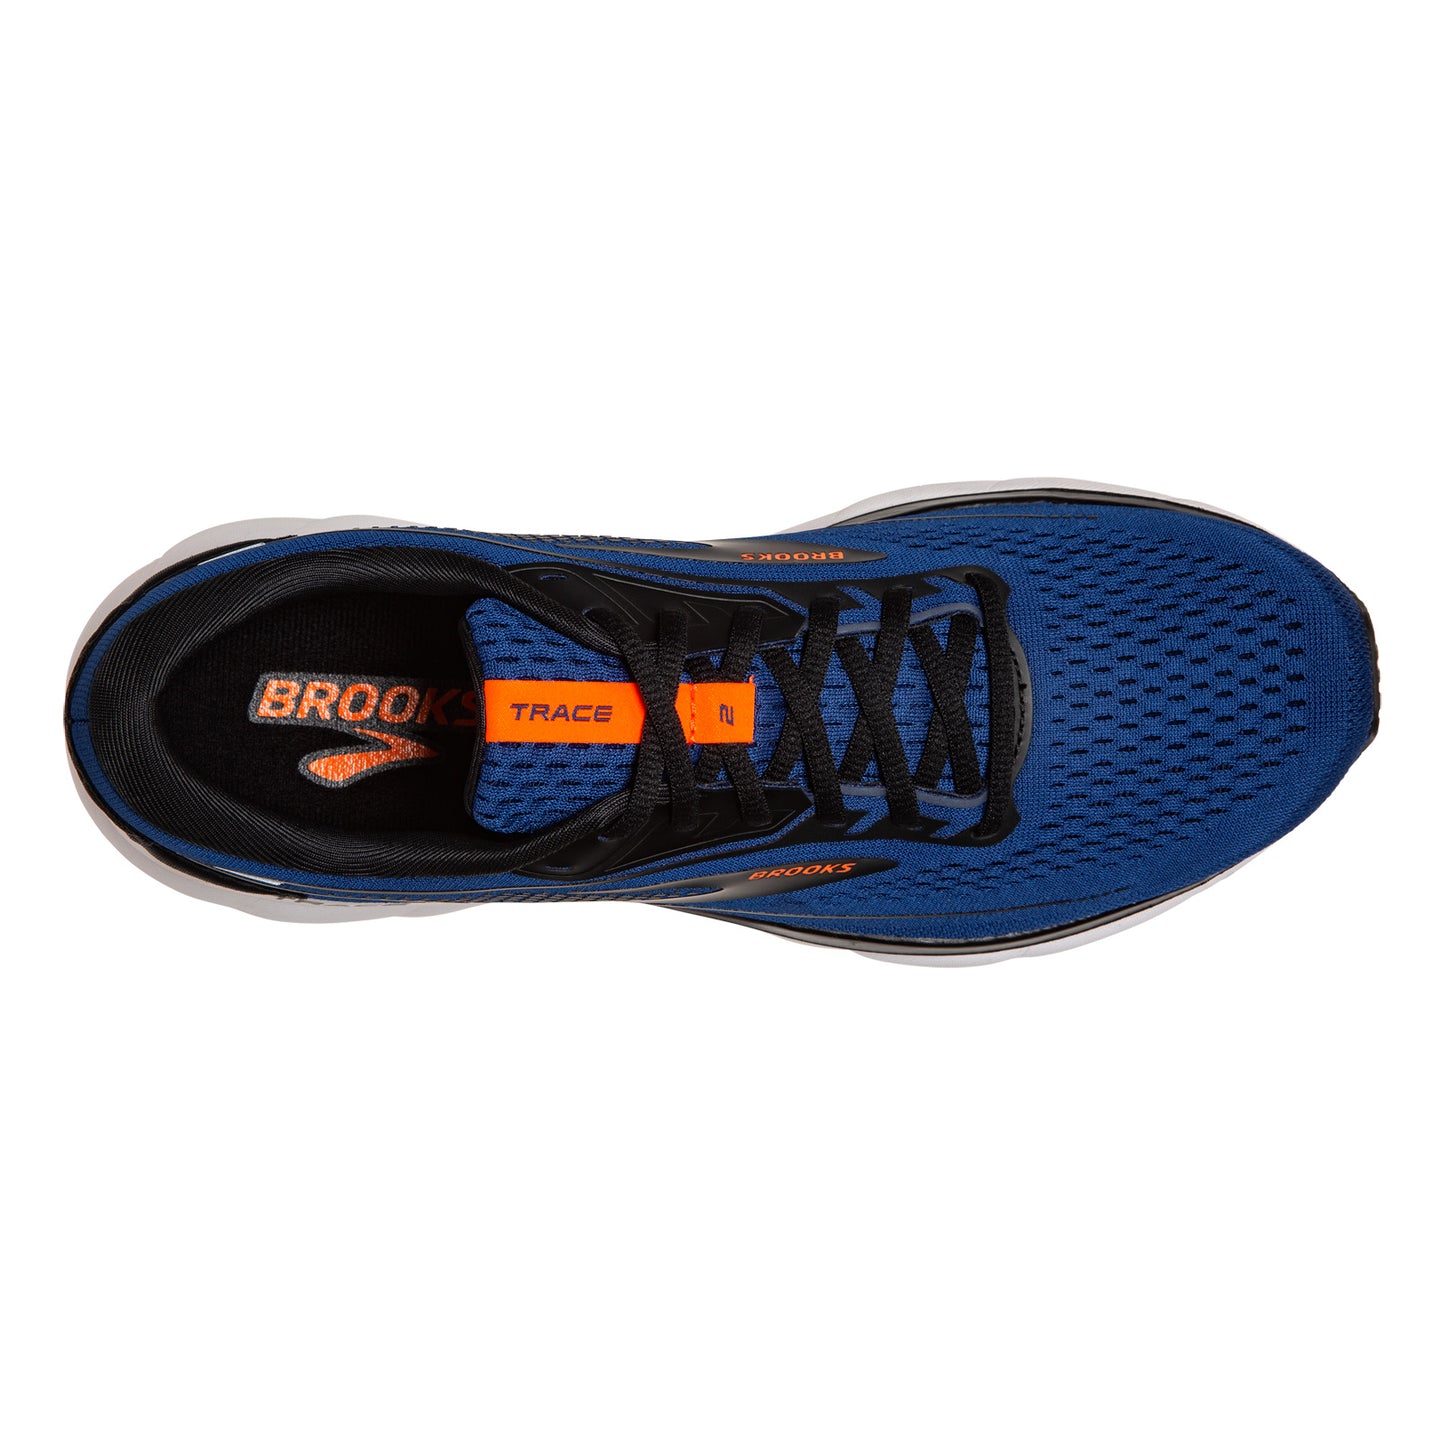 Peltz Shoes  Men's BROOKSMen's Brooks Trace 2 Running Shoe Blue/Black/White 110388 1D 489